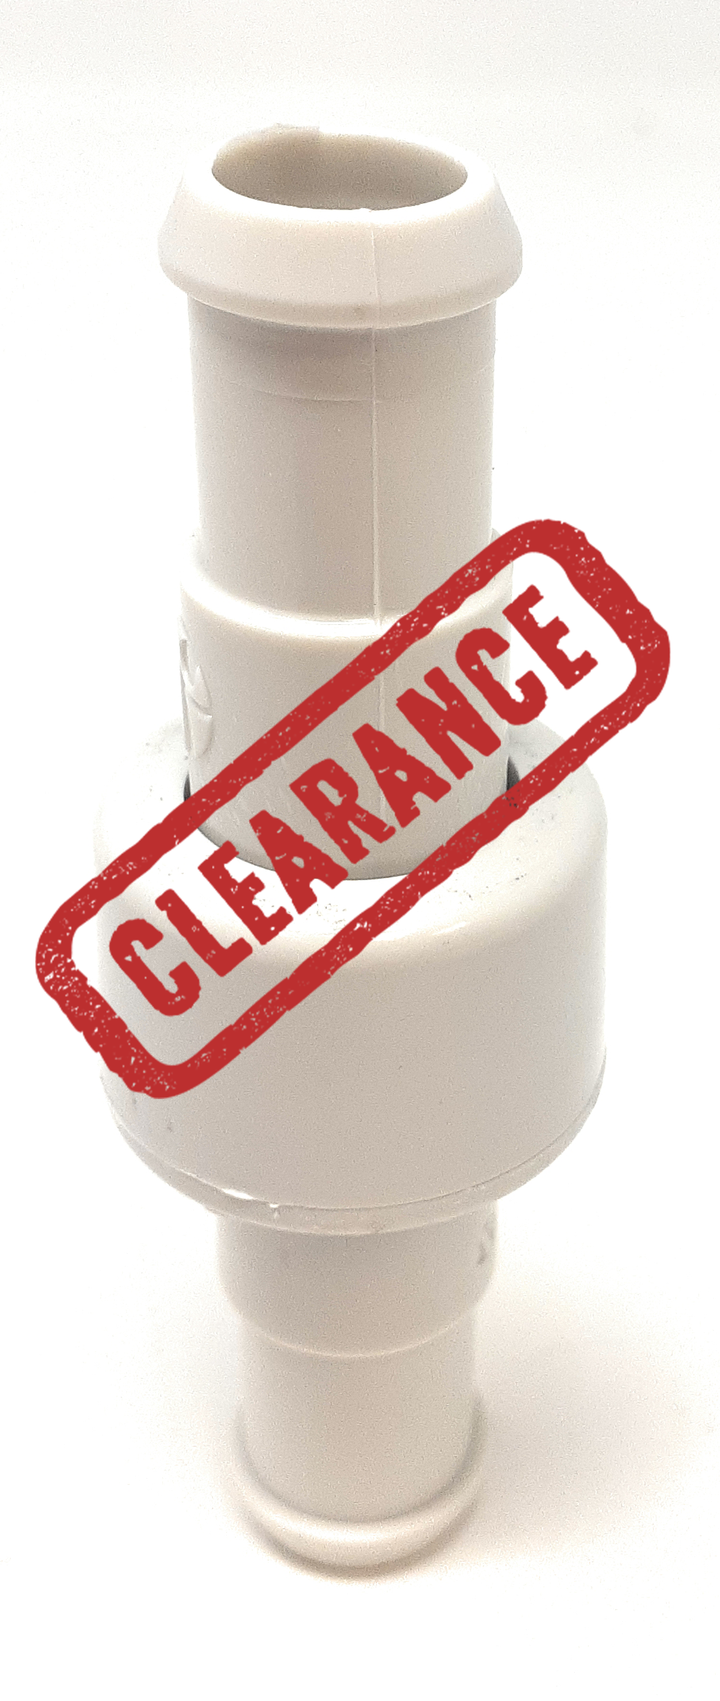 Clearance - Polaris Vac-Sweep 380 / 280 / 180 / 280 TankTrax Pressure Cleaner Swivel, Ball Bearing